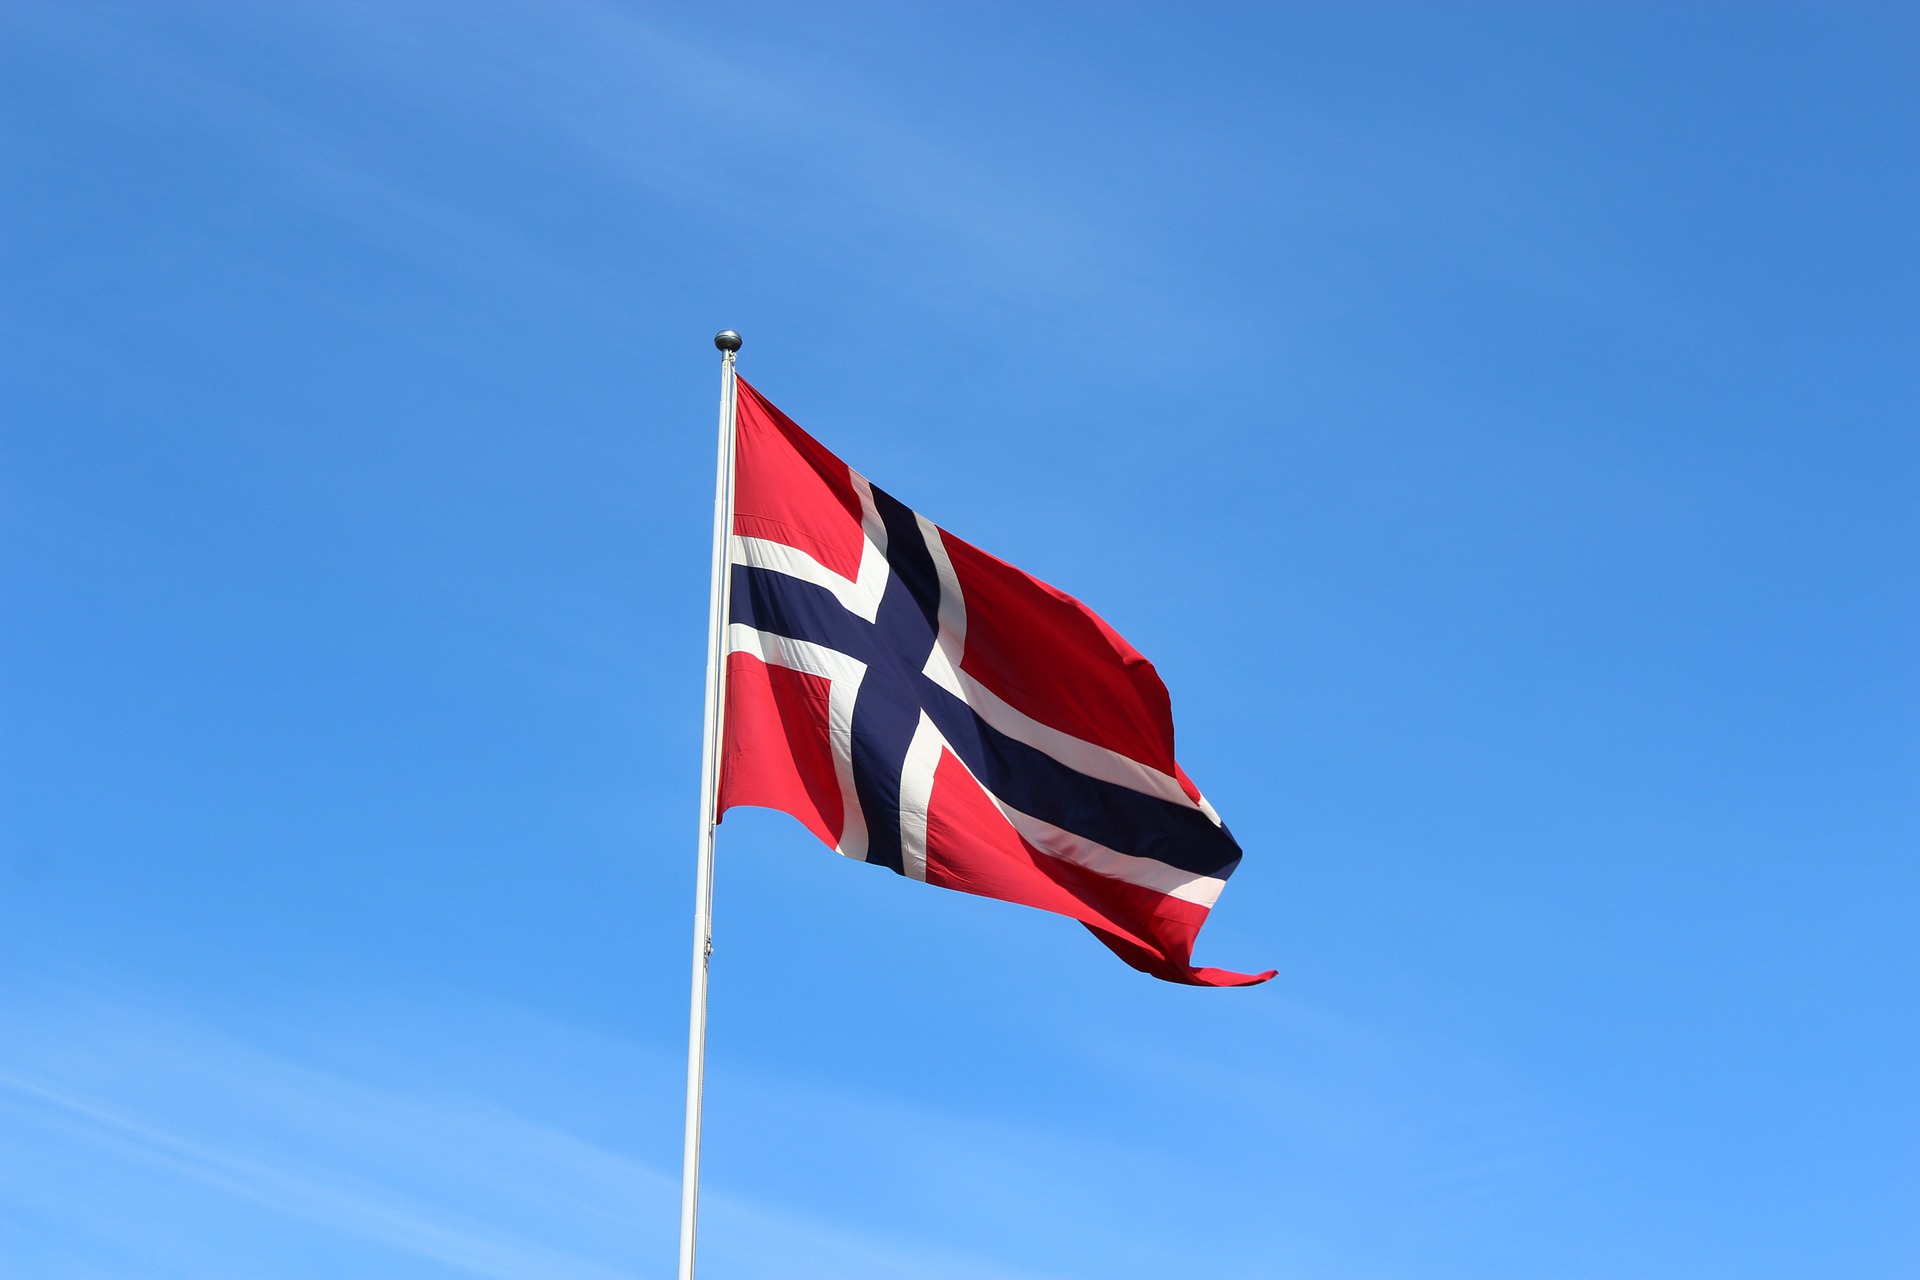 Въезд в Норвегию без веских оснований запрещен с 29 января в рамках борьбы с COVID-19. Фото: pixabay.com